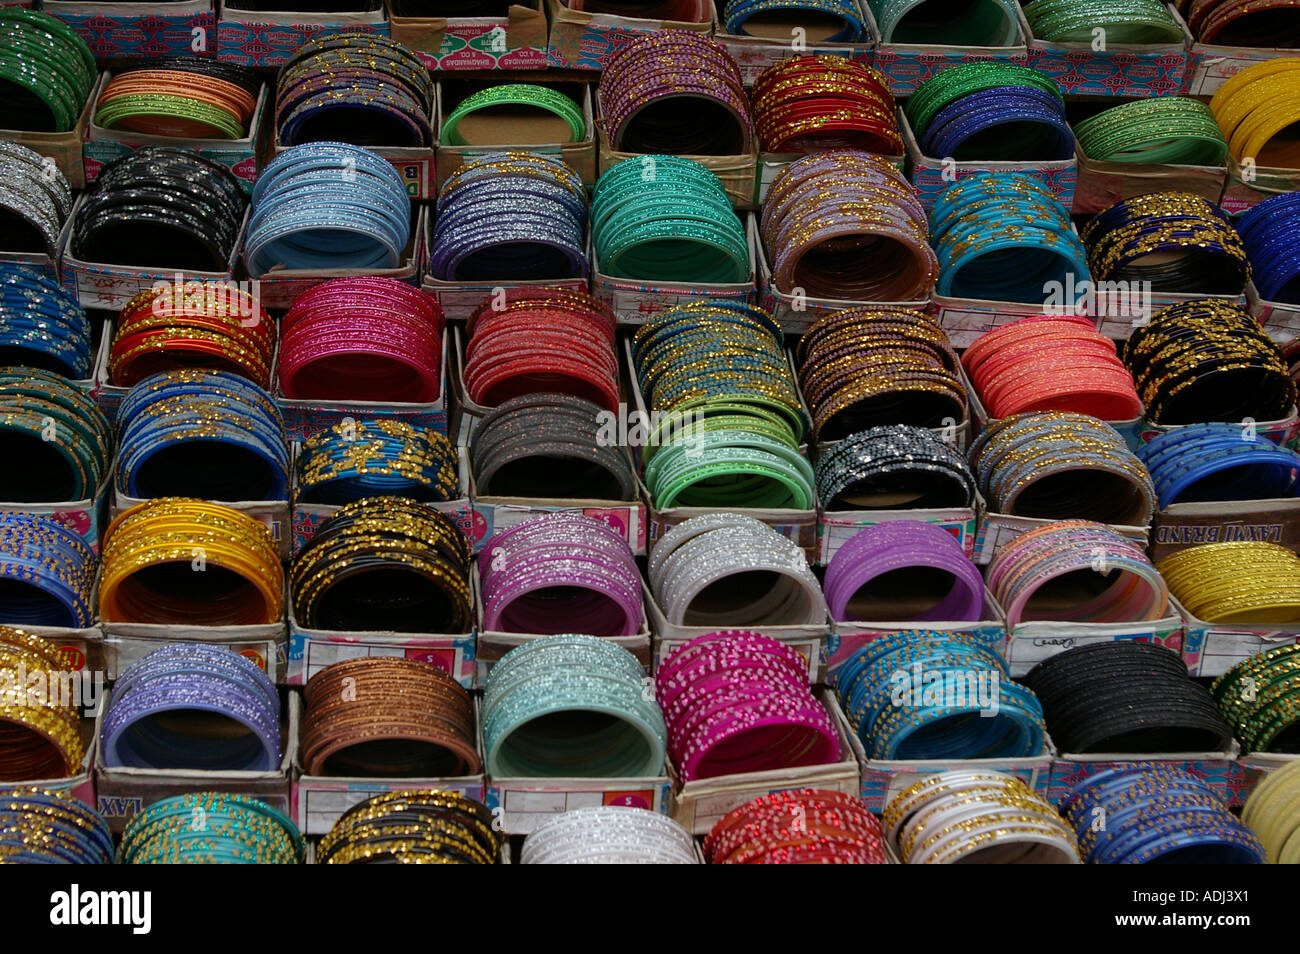 Connemara market Palayam Trivandrum Thiruvananthapuram Kerala South India bangle display colours colourful colors colorful stall Stock Photo